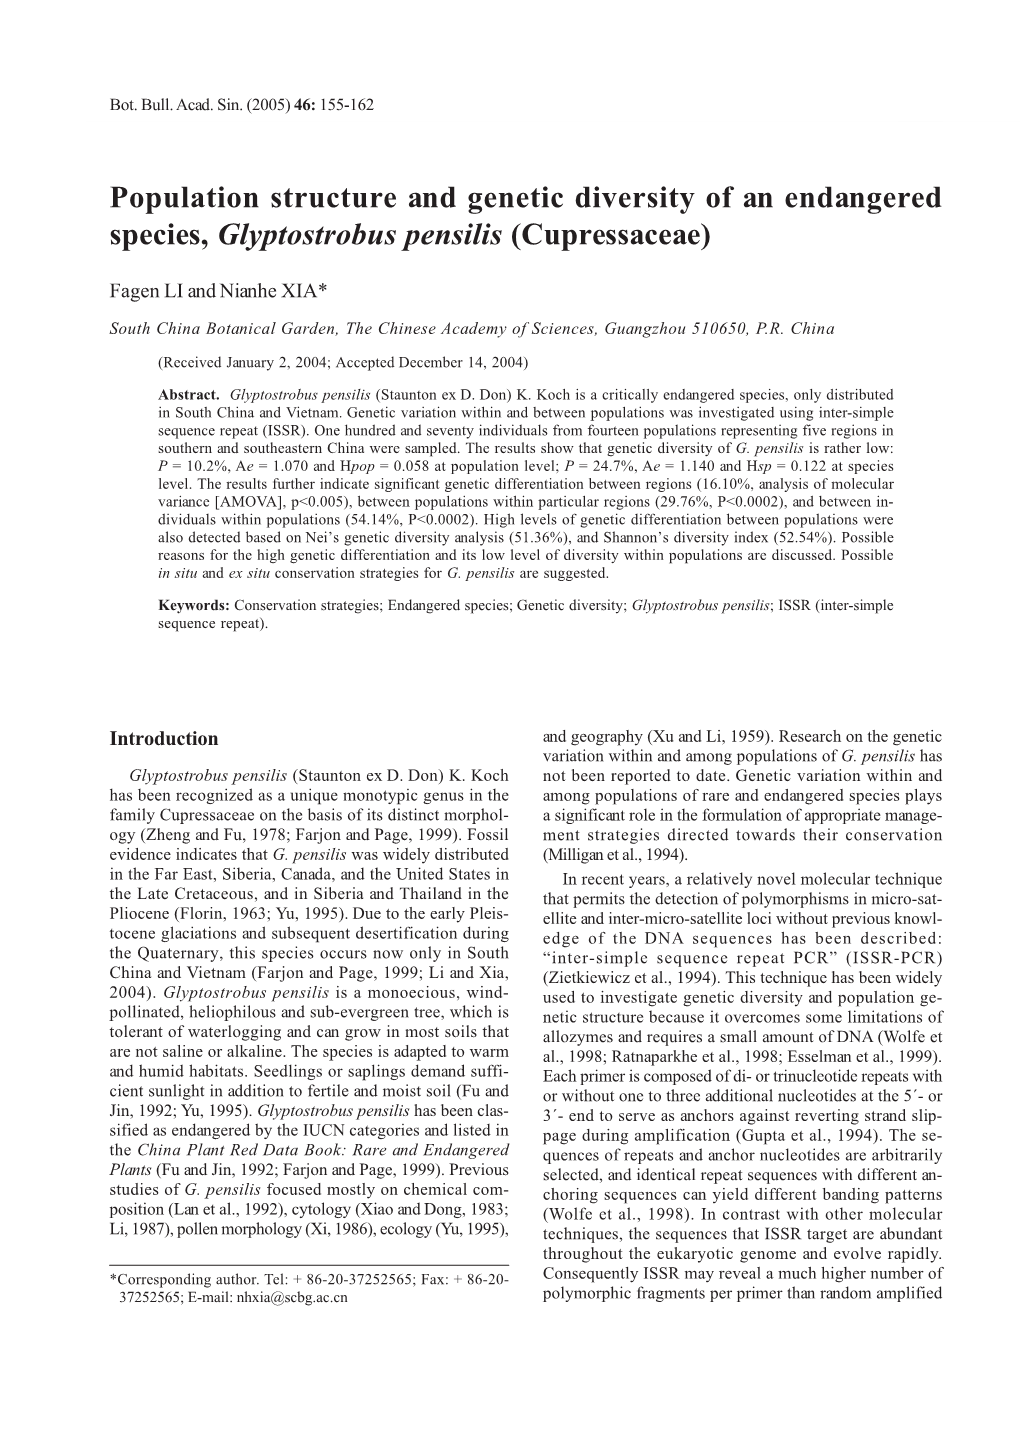 Population Structure and Genetic Diversity of an Endangered Species, Glyptostrobus Pensilis (Cupressaceae)